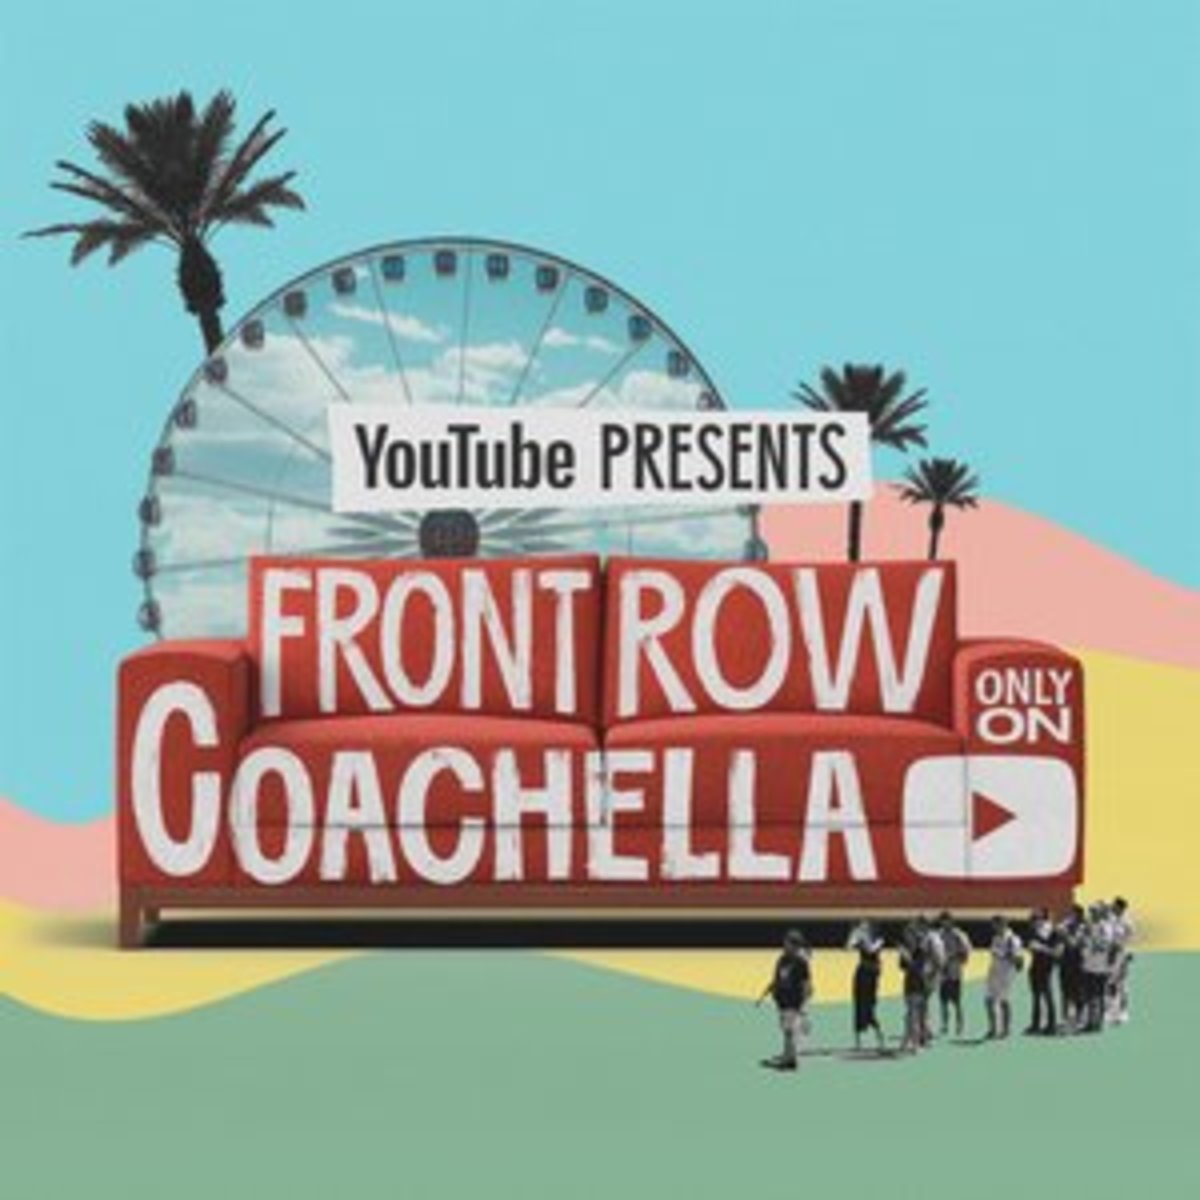 YouTube presents FRONT ROW COACHELLA 2022